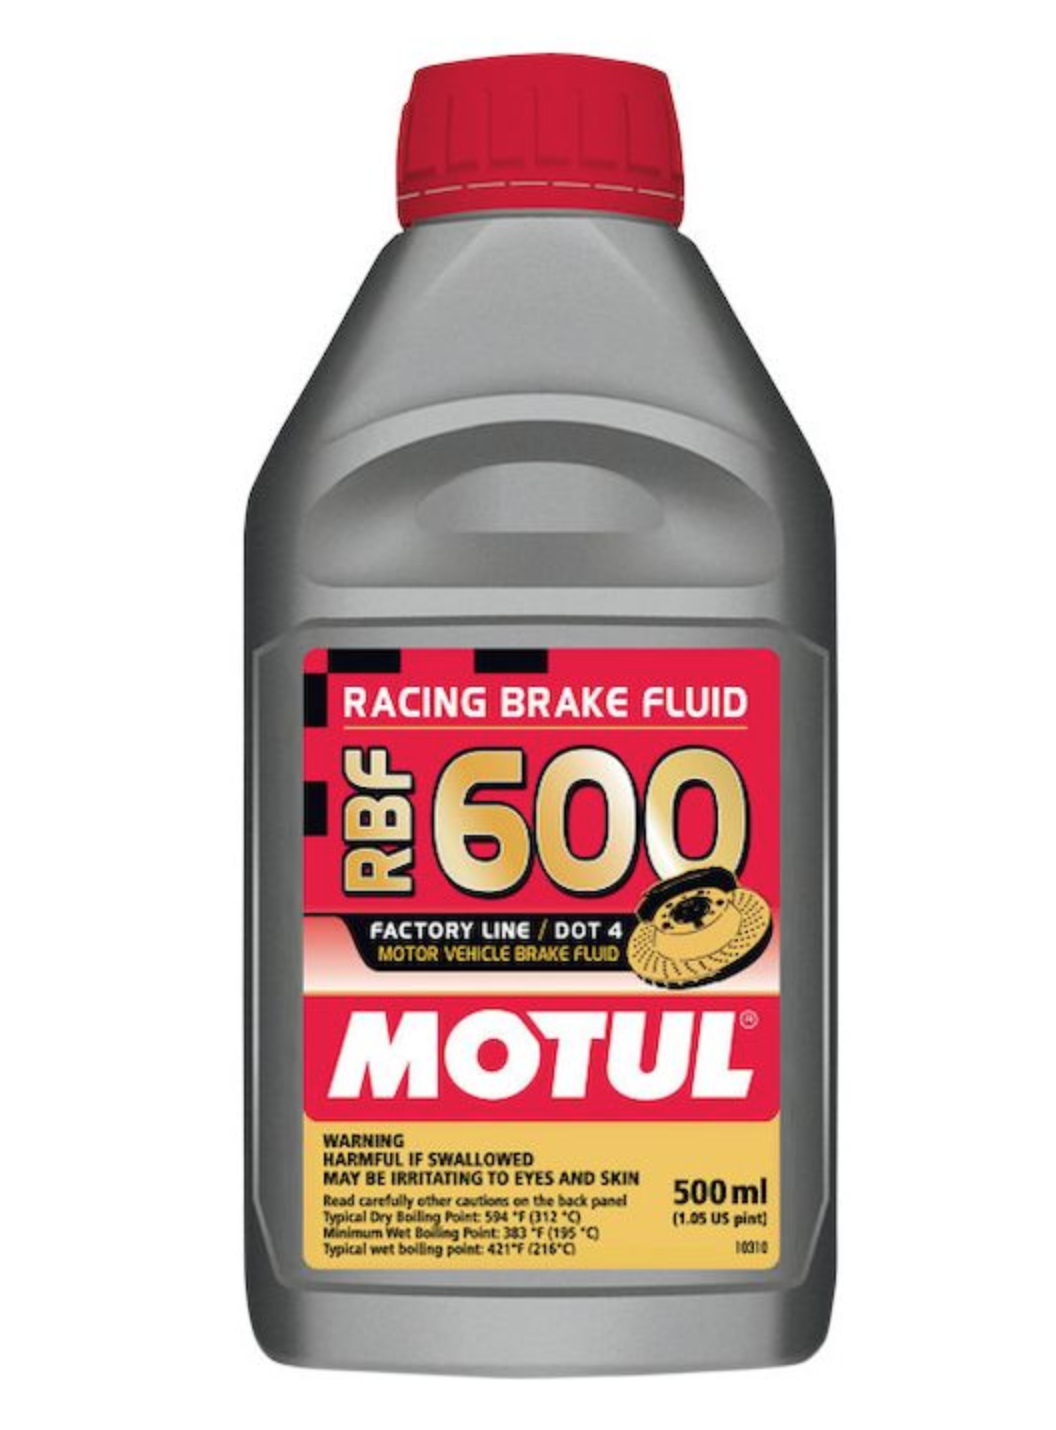 MOTUL Racing RBF 600 (500 ml) for Porsches